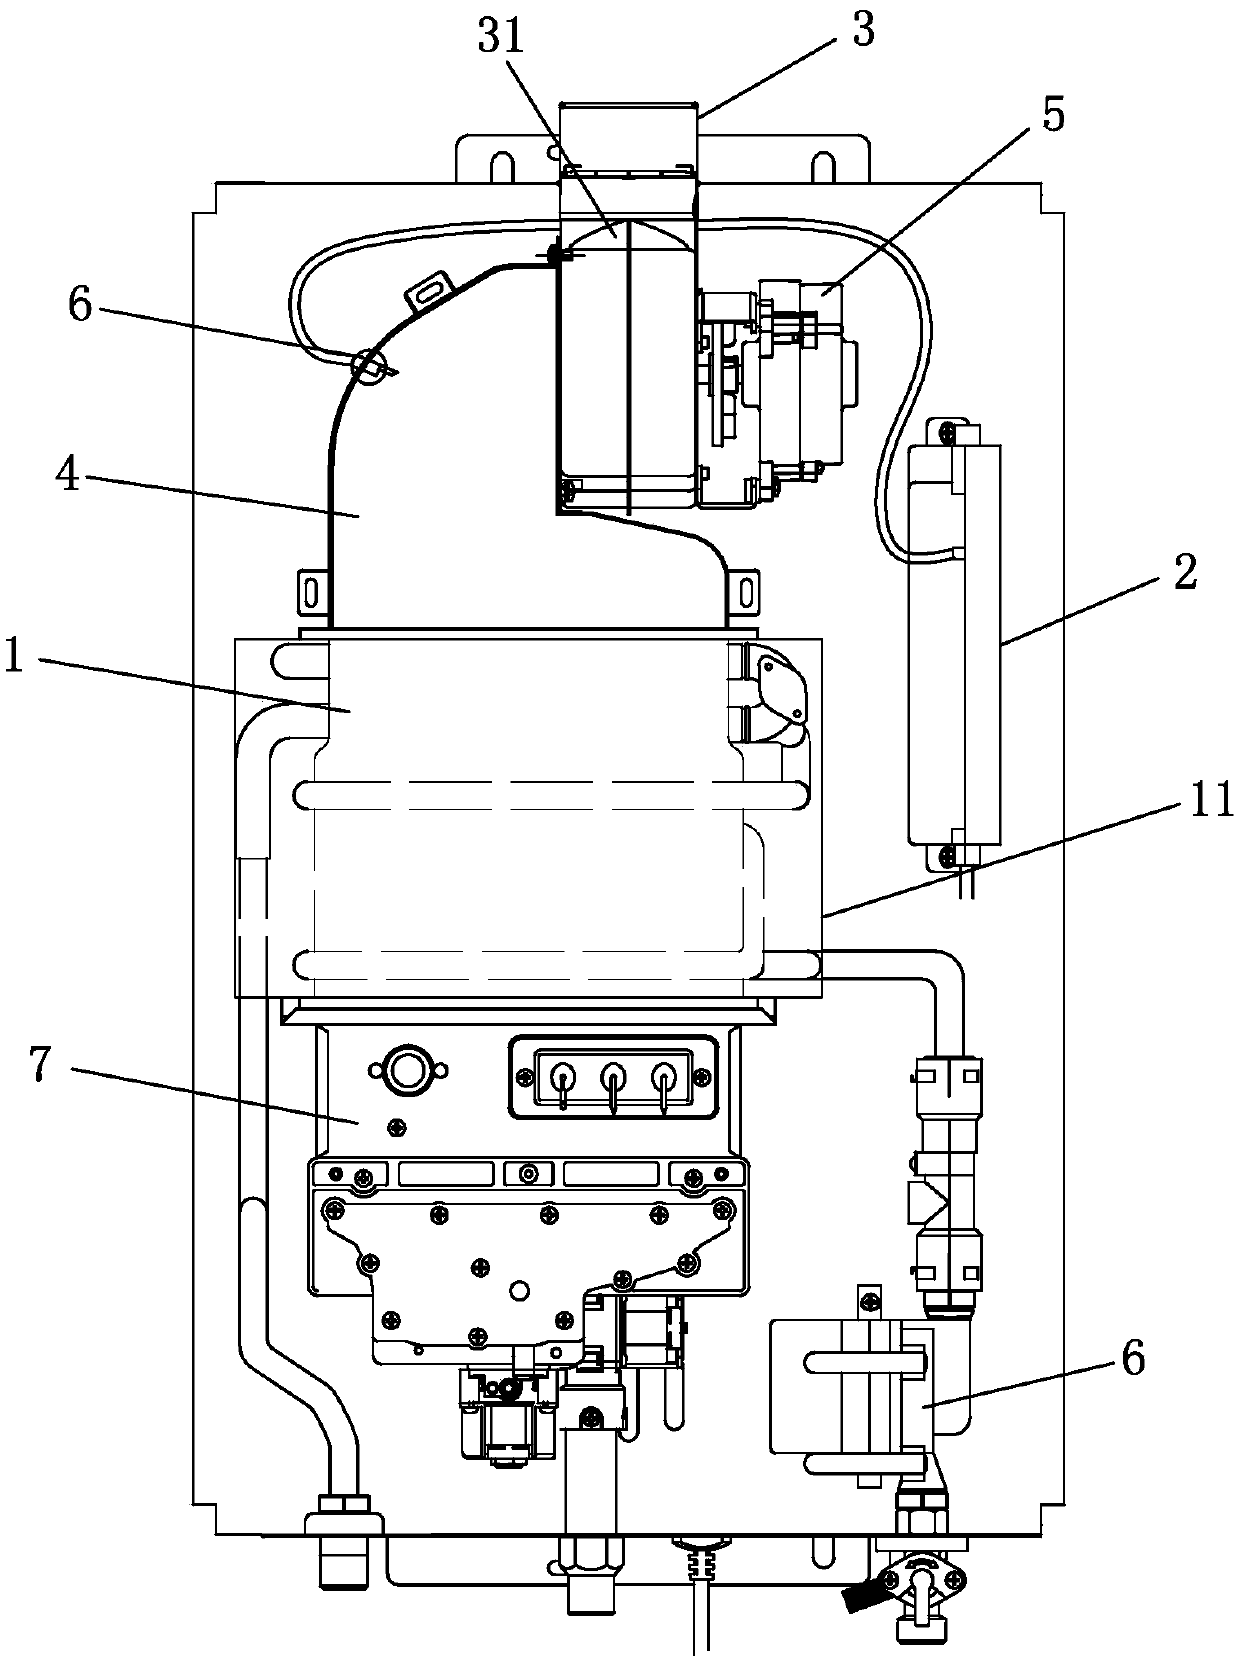 Self-adaptive gas water heater